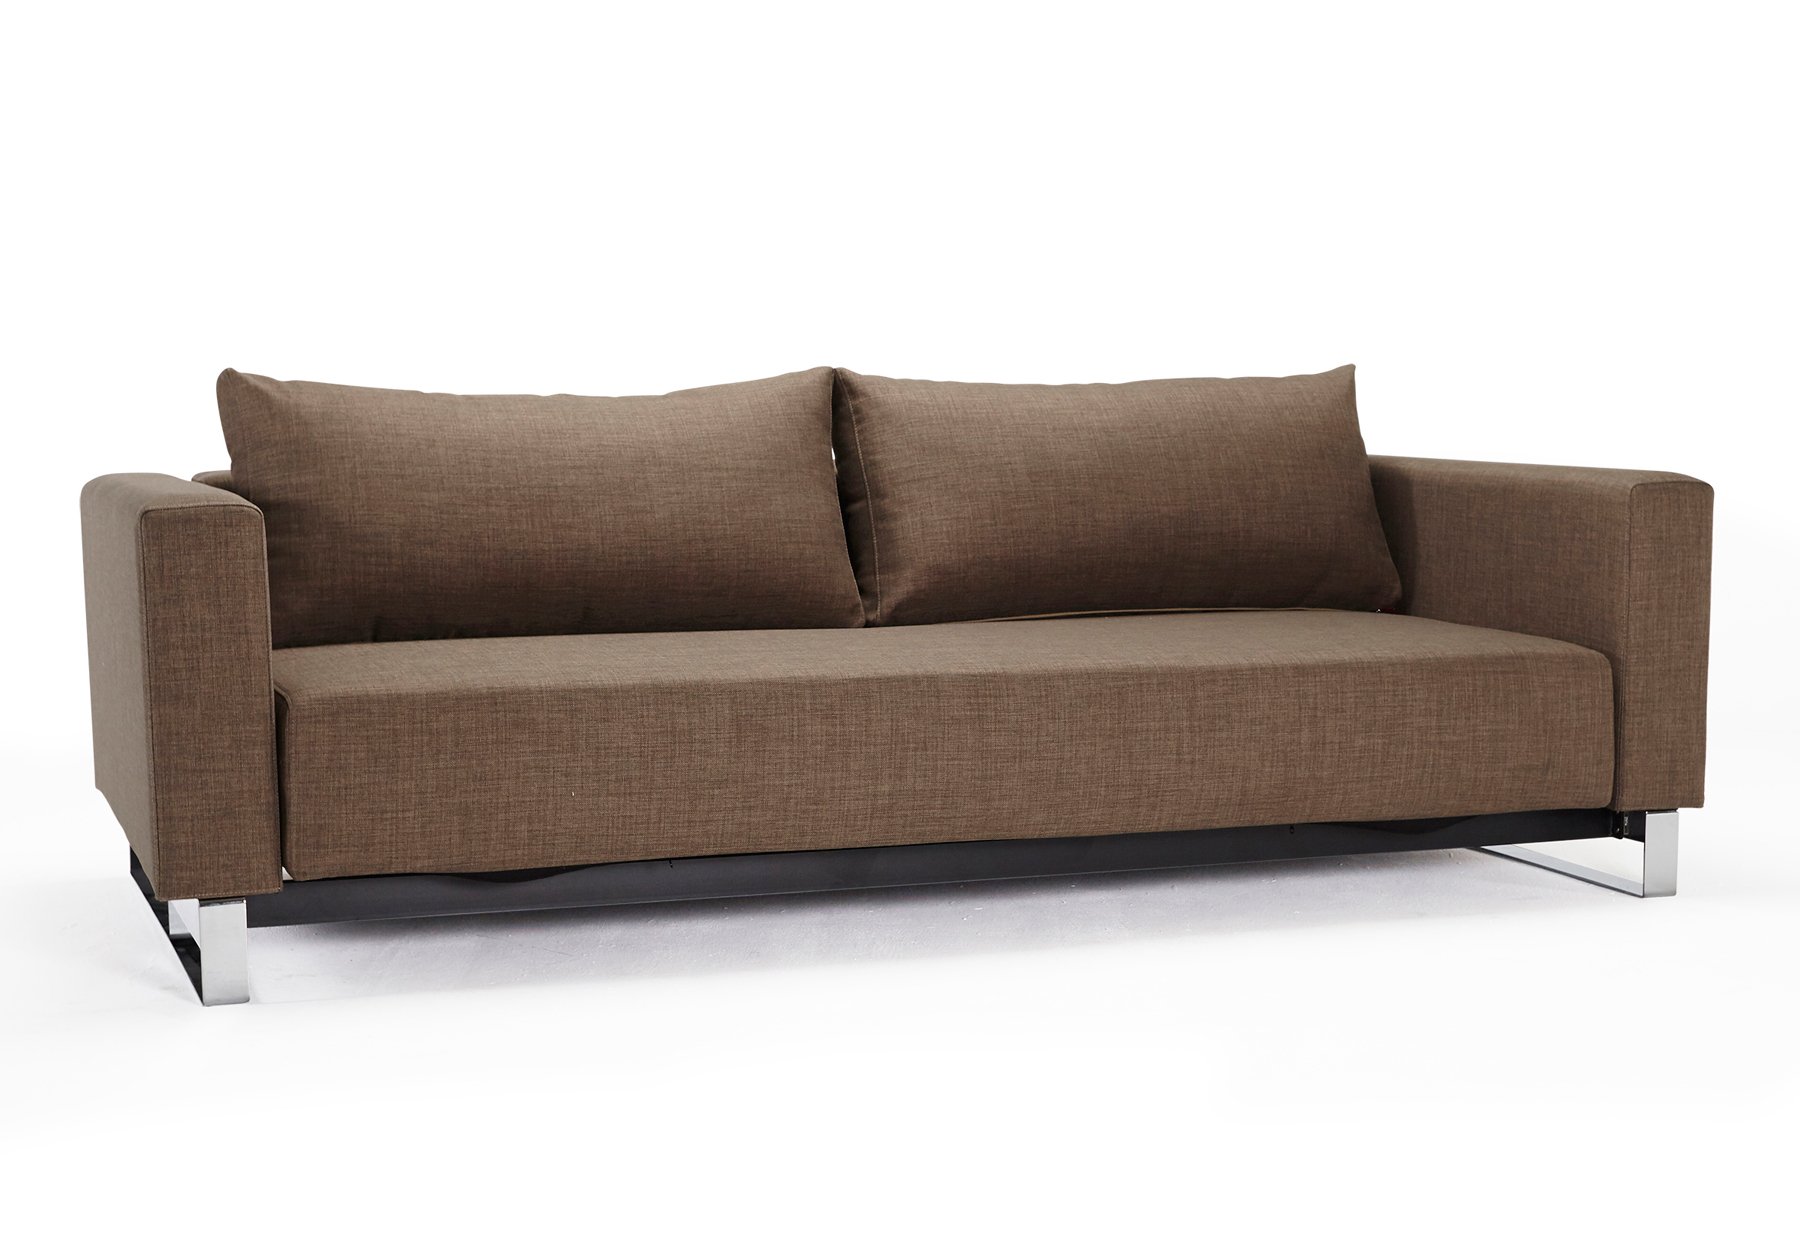 cassius sleek excess lounger sofa bed